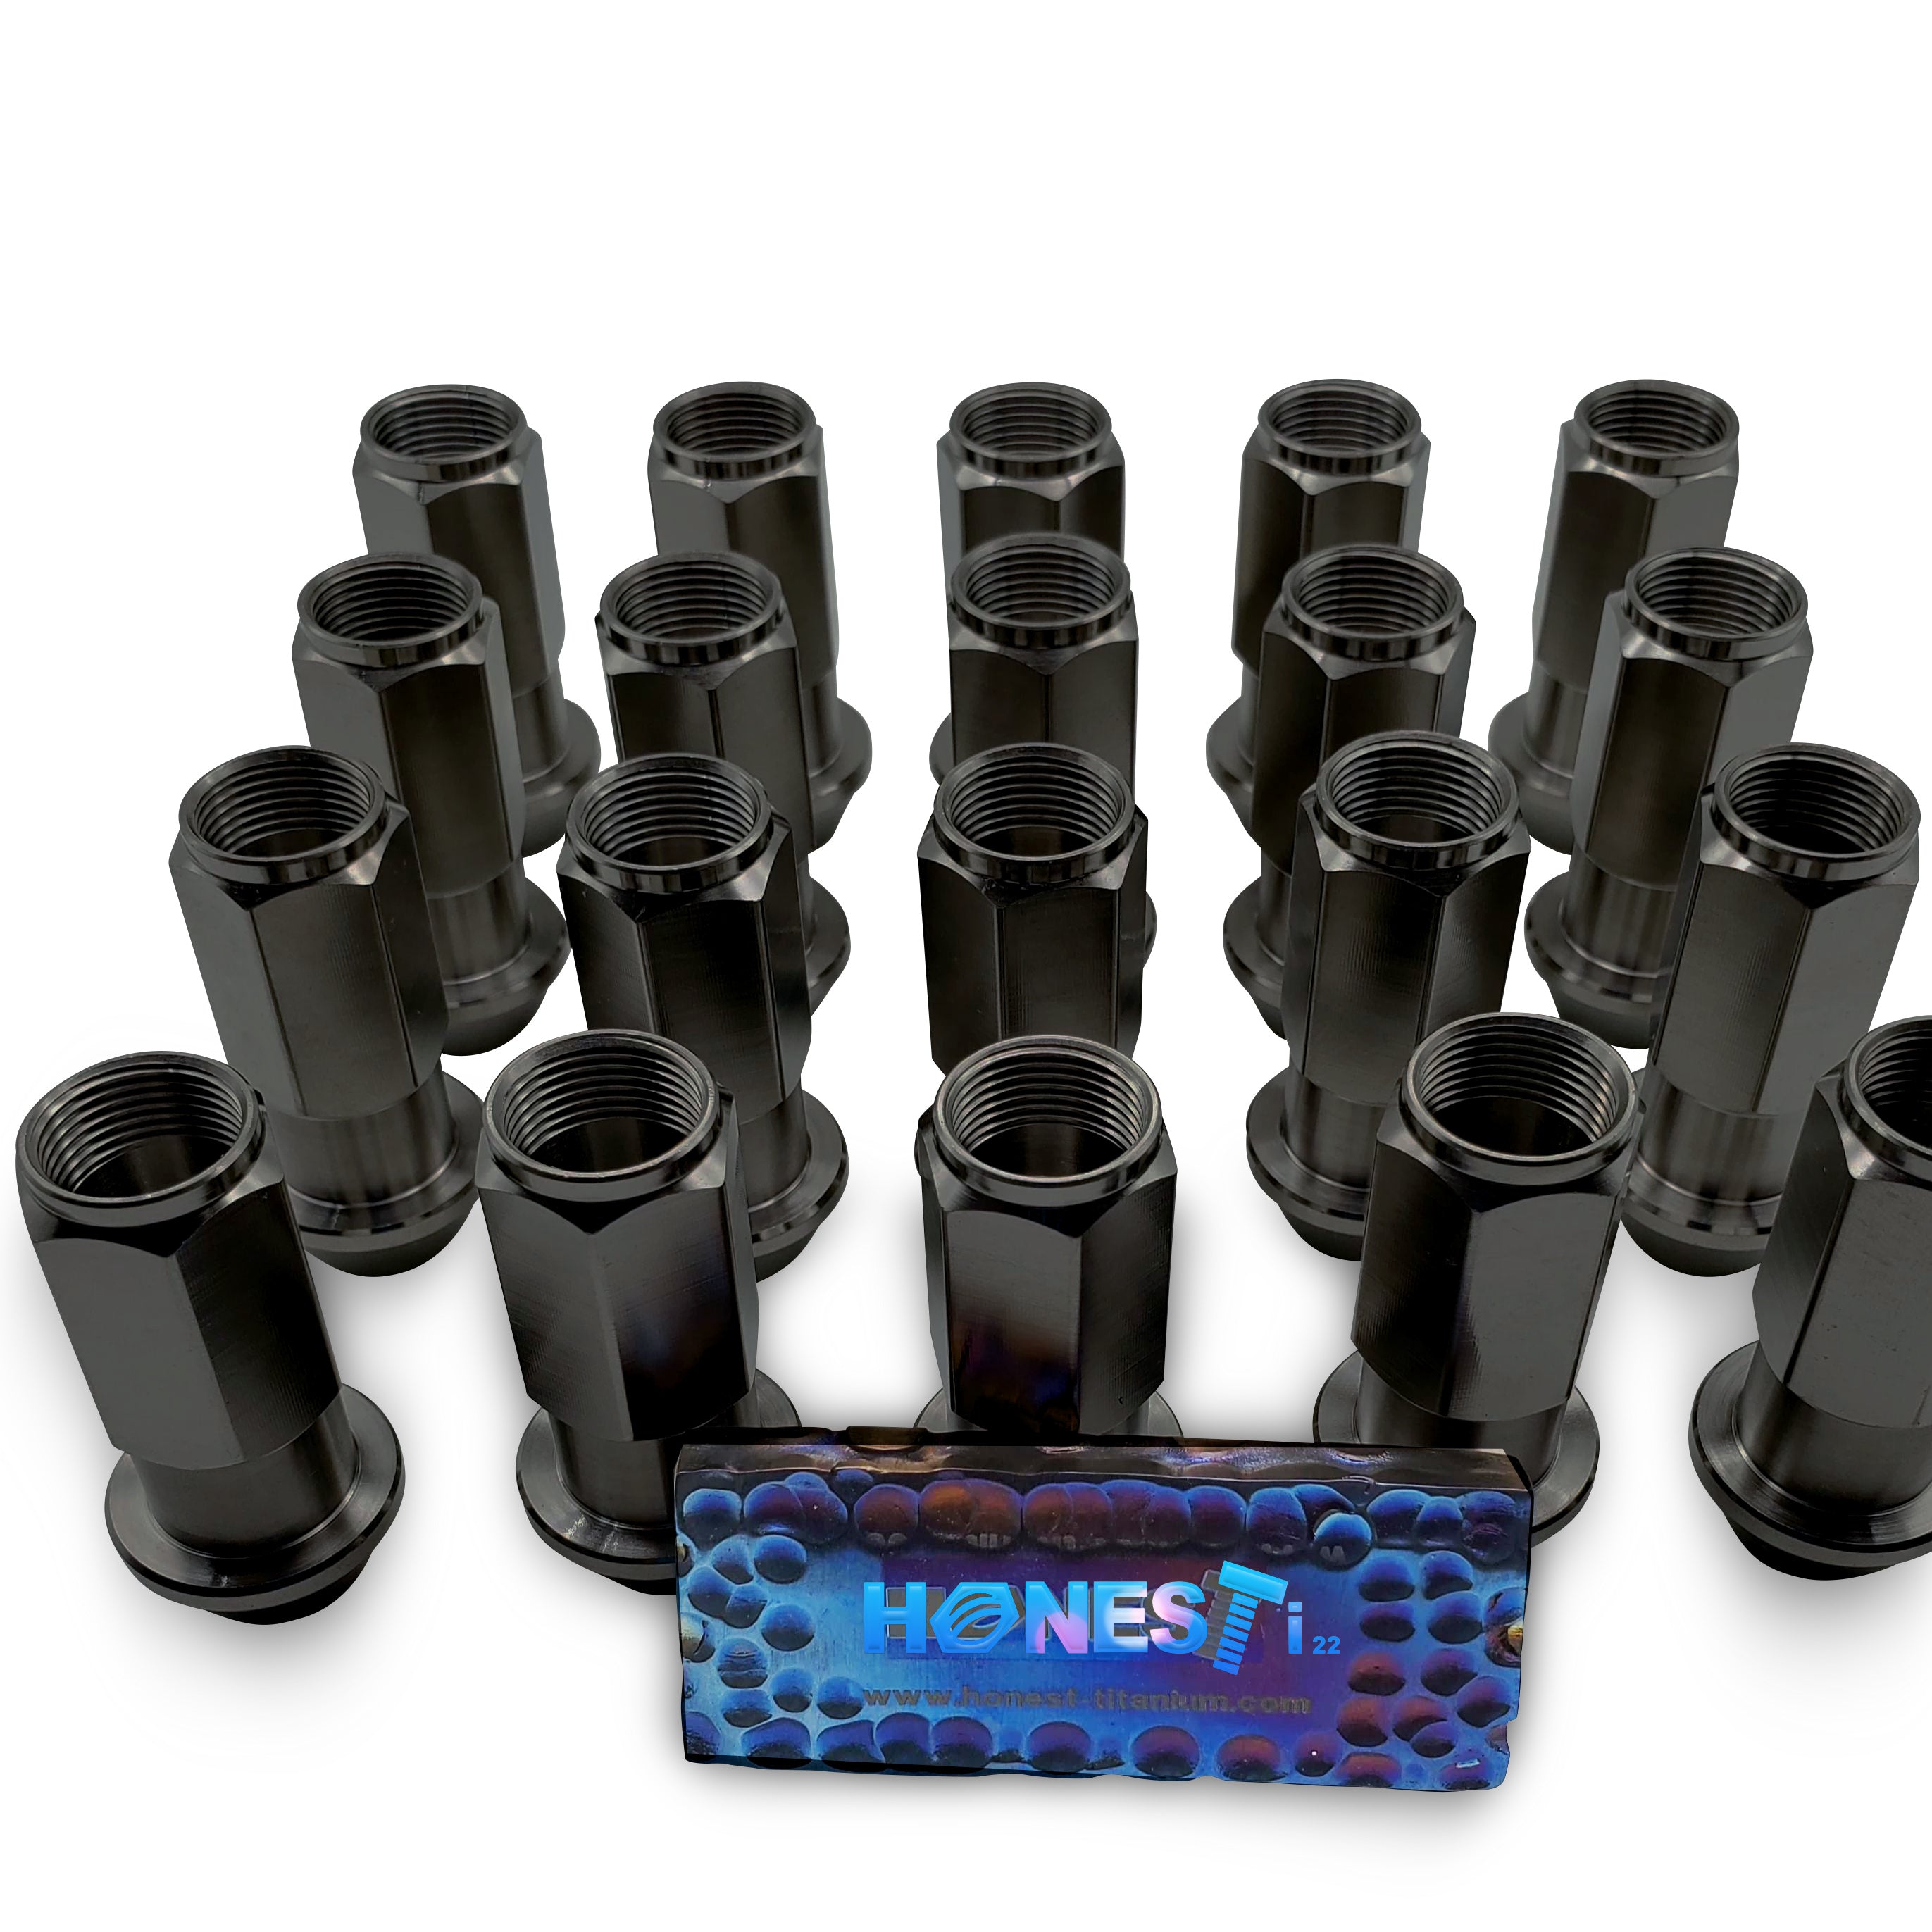 Gr5 Titanium Lug Nuts, M12x1.5x48mm, Cone Seat, Open End PVD coating Black